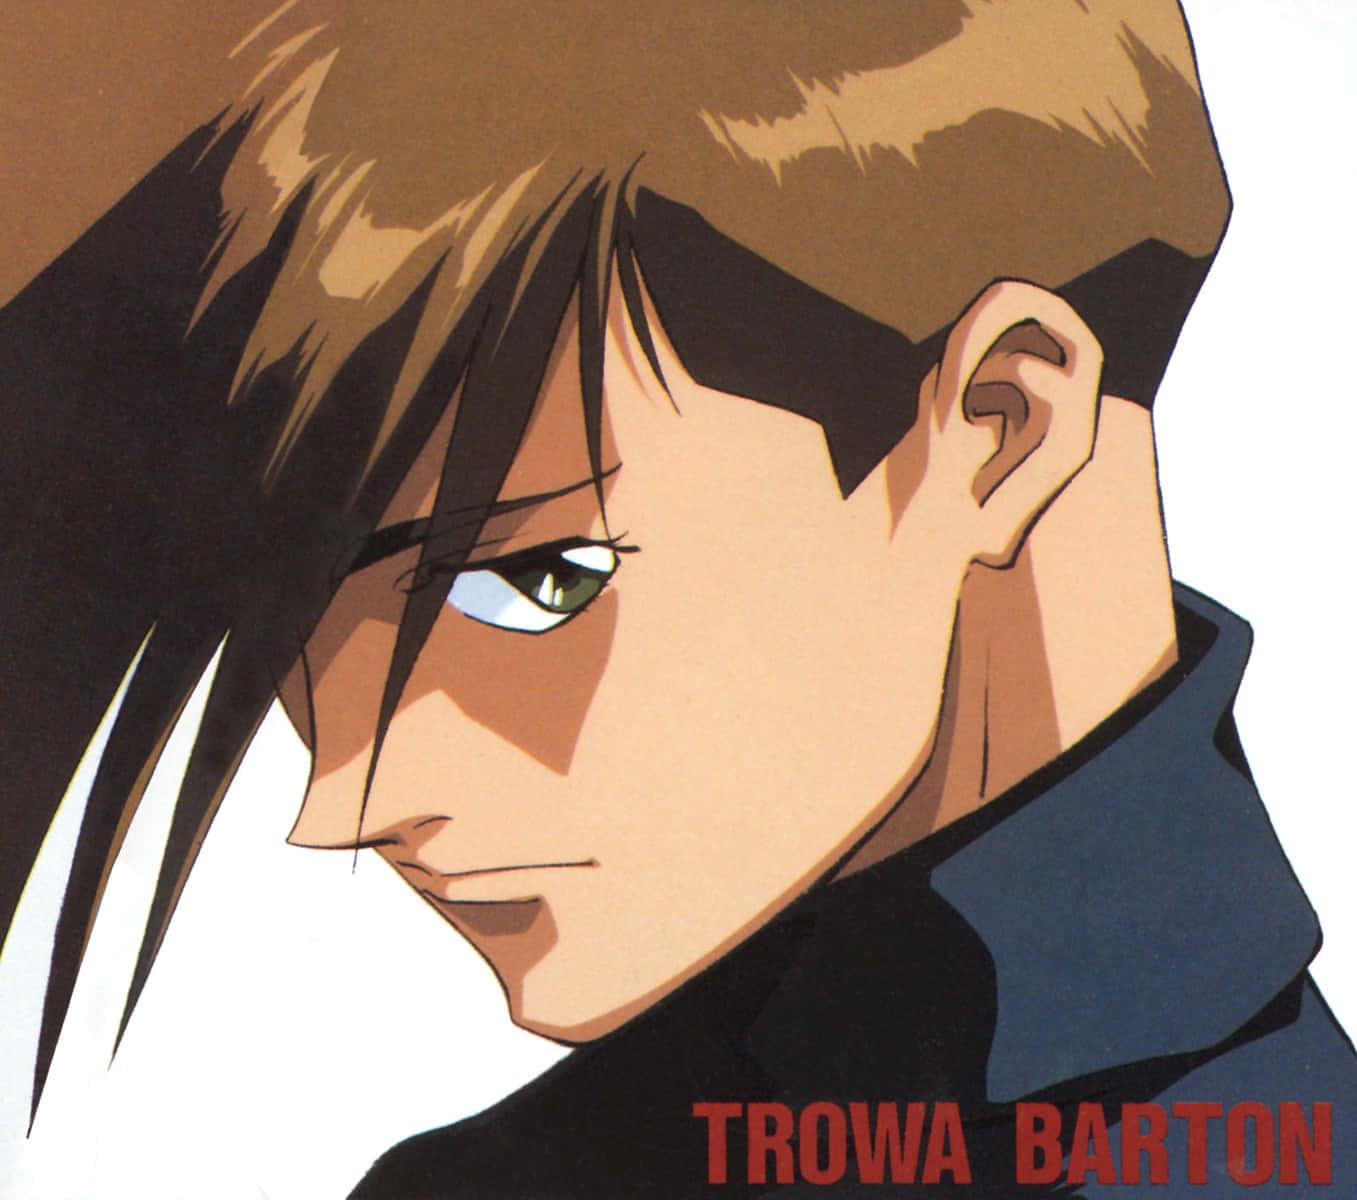 Caption: Trowa Barton - The Gundam Pilot Wallpaper